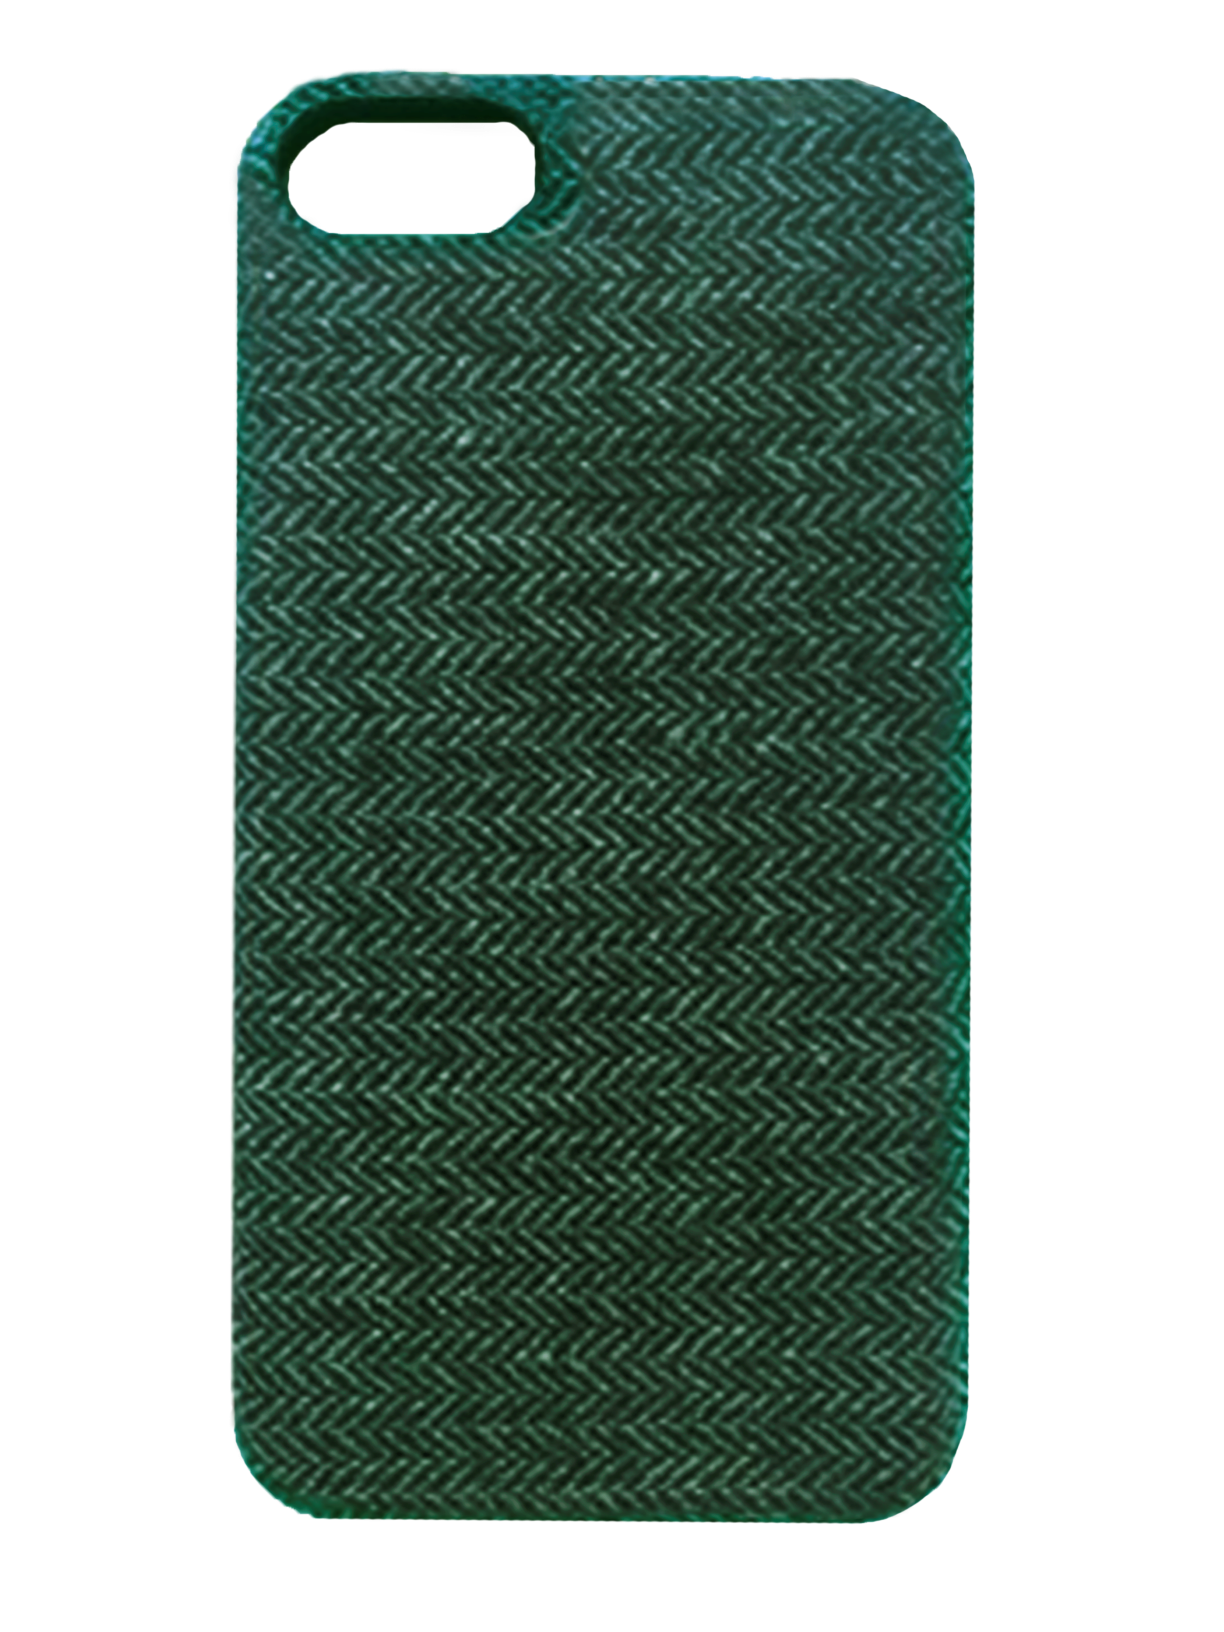 Slate Grey Tweed - iPhone 6/6s/7/8